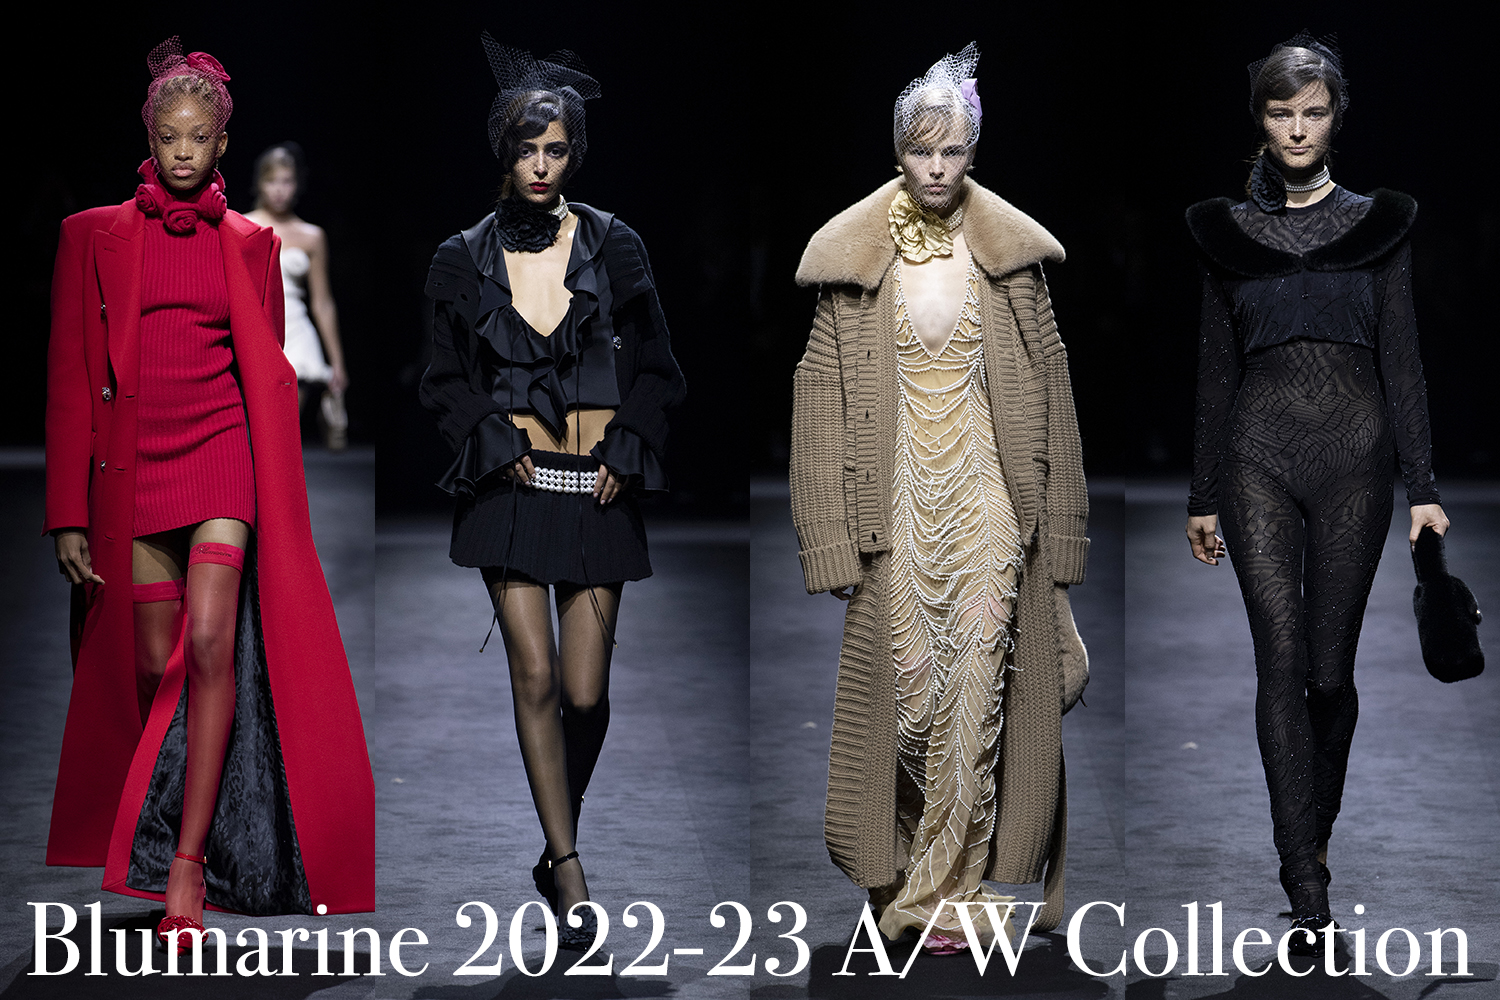 Blumarine 2022-23 A/W Collection 素晴らしい多様性の中で